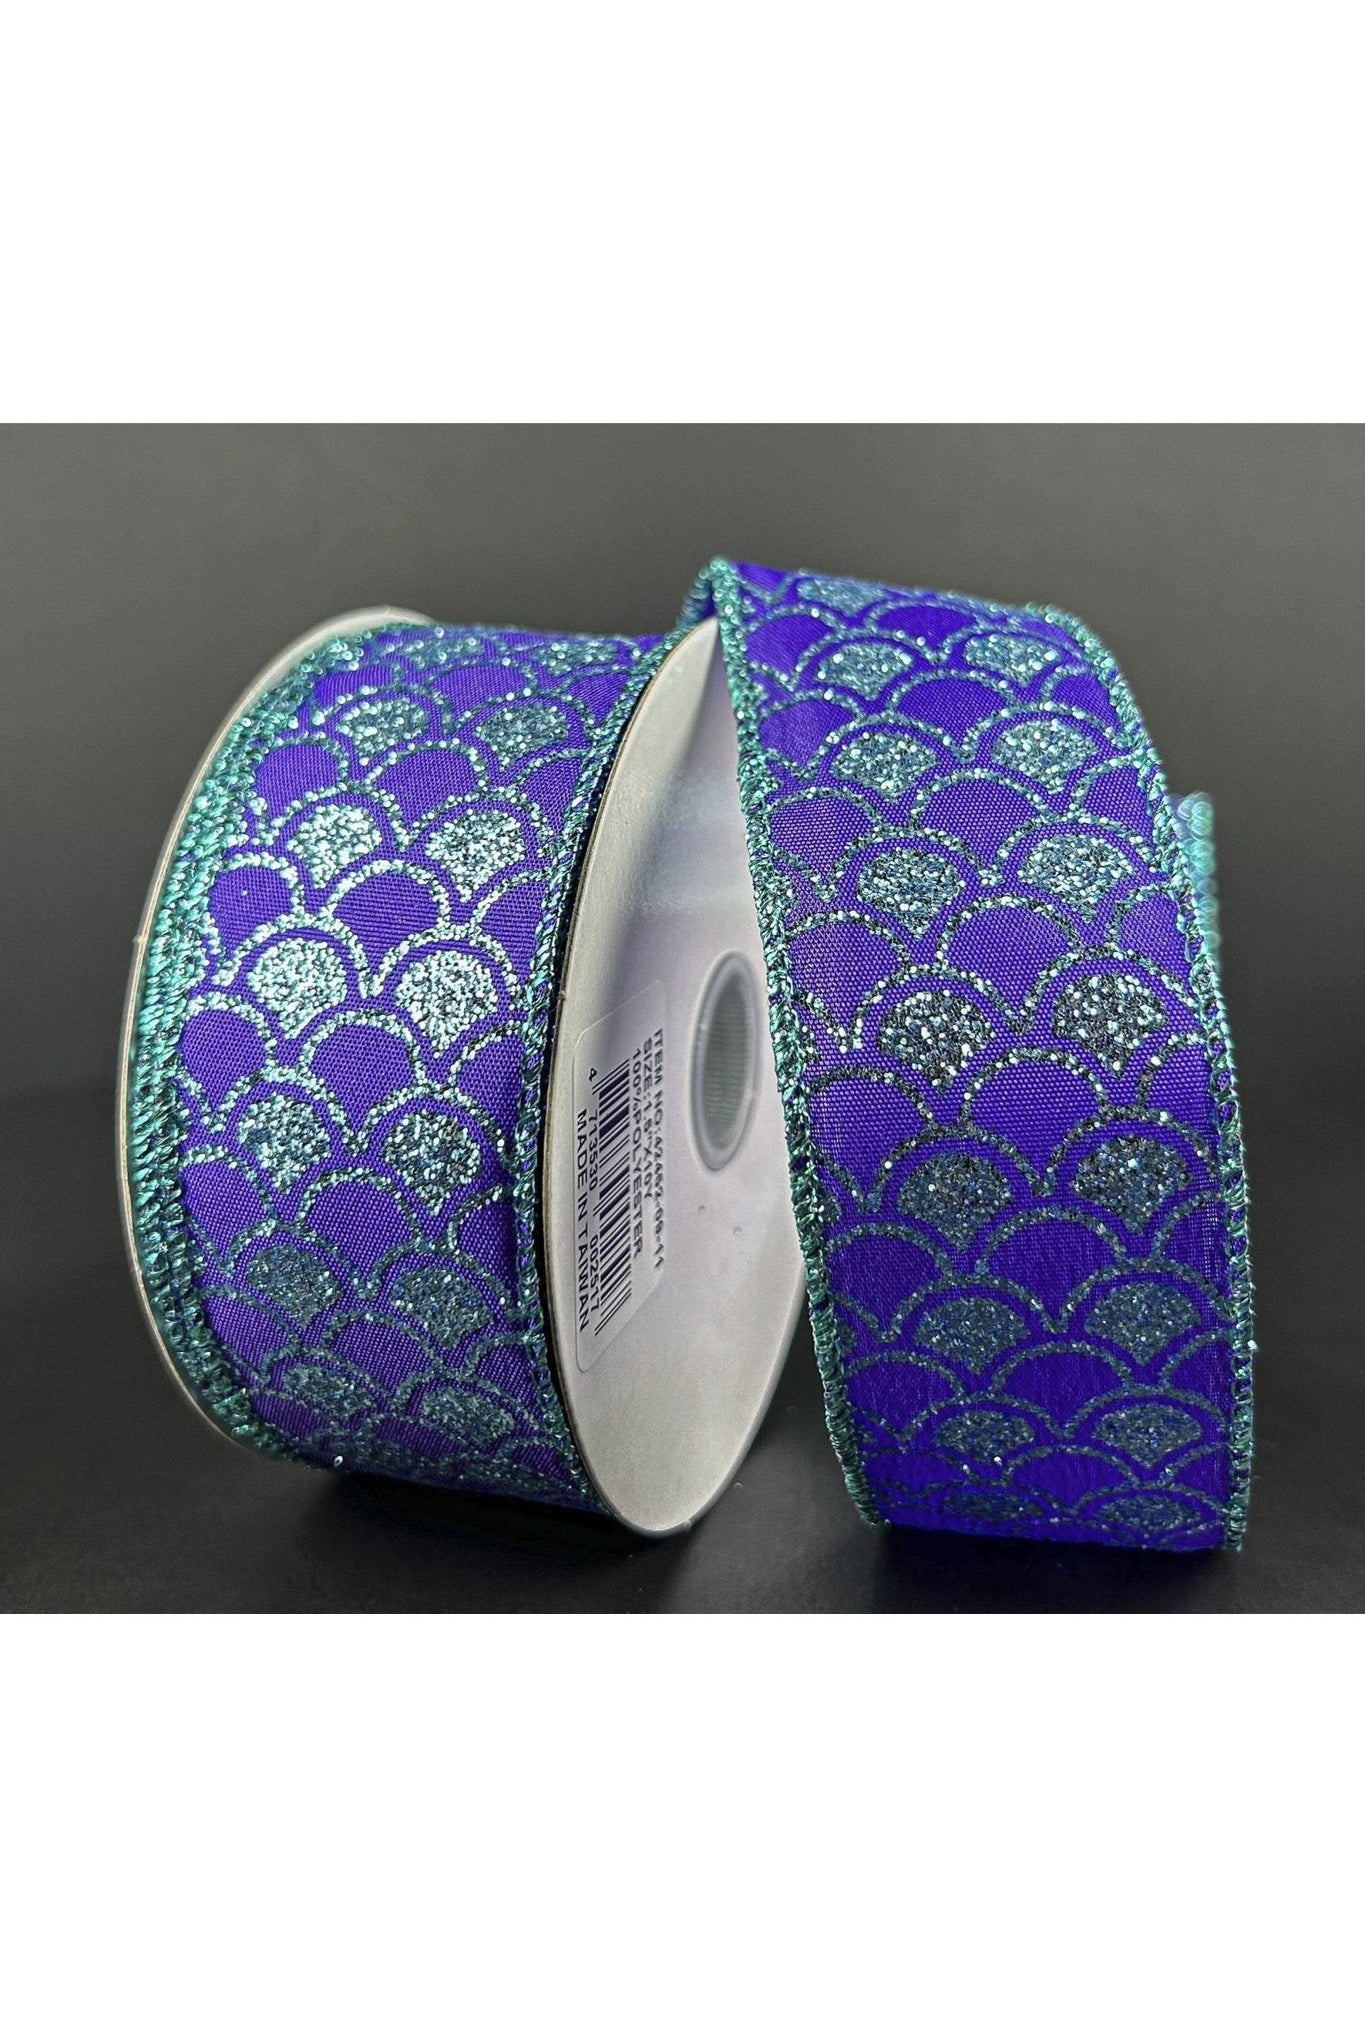 1.5" Glitter Fish Scales Ribbon: Purple/Aqua (10 Yards) - Michelle's aDOORable Creations - Wired Edge Ribbon